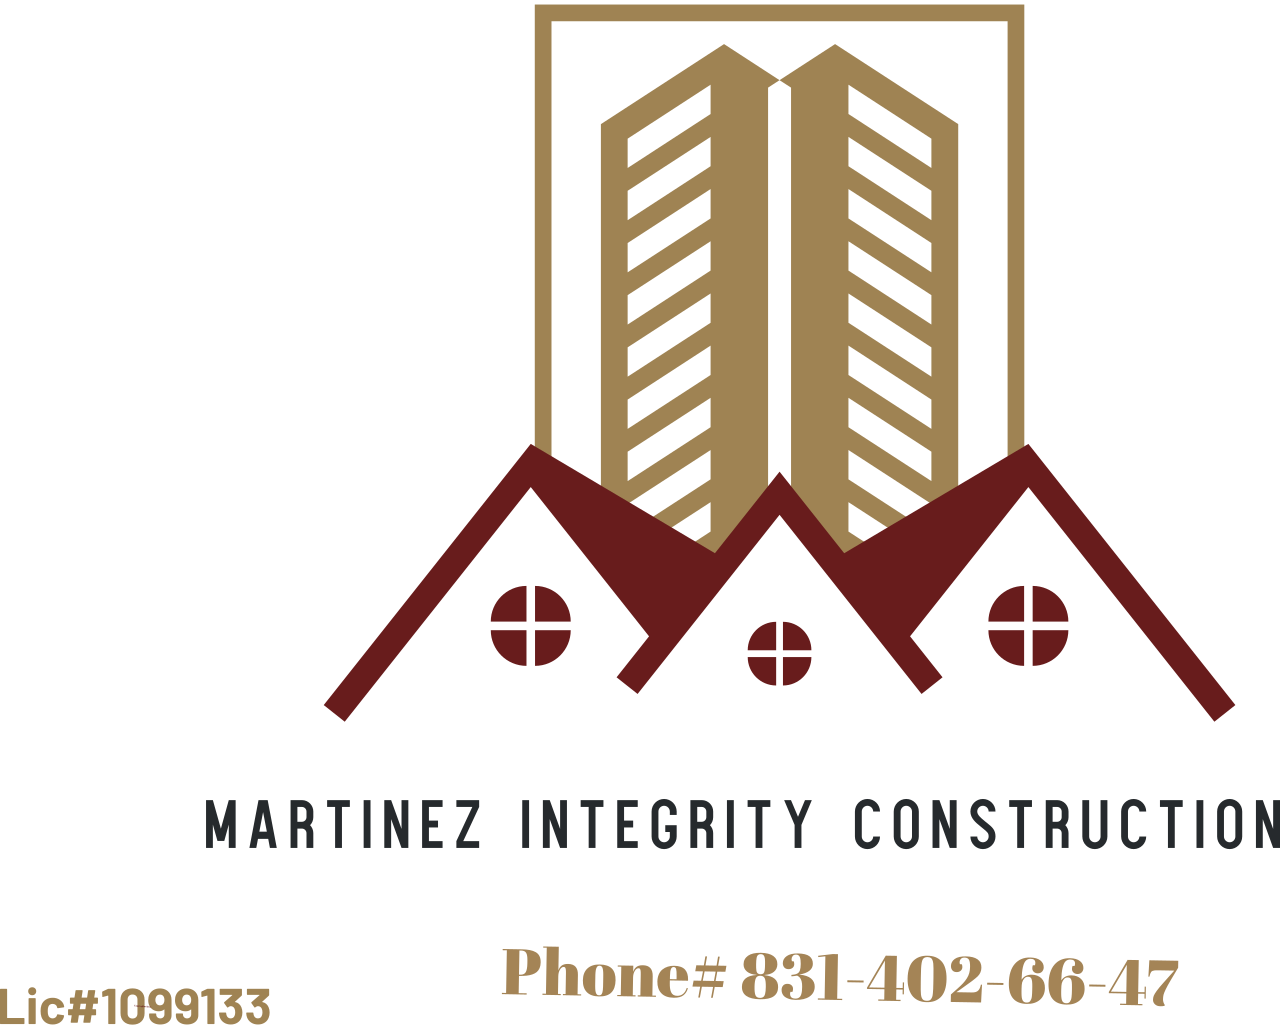 Martinez integrity construction 's web page